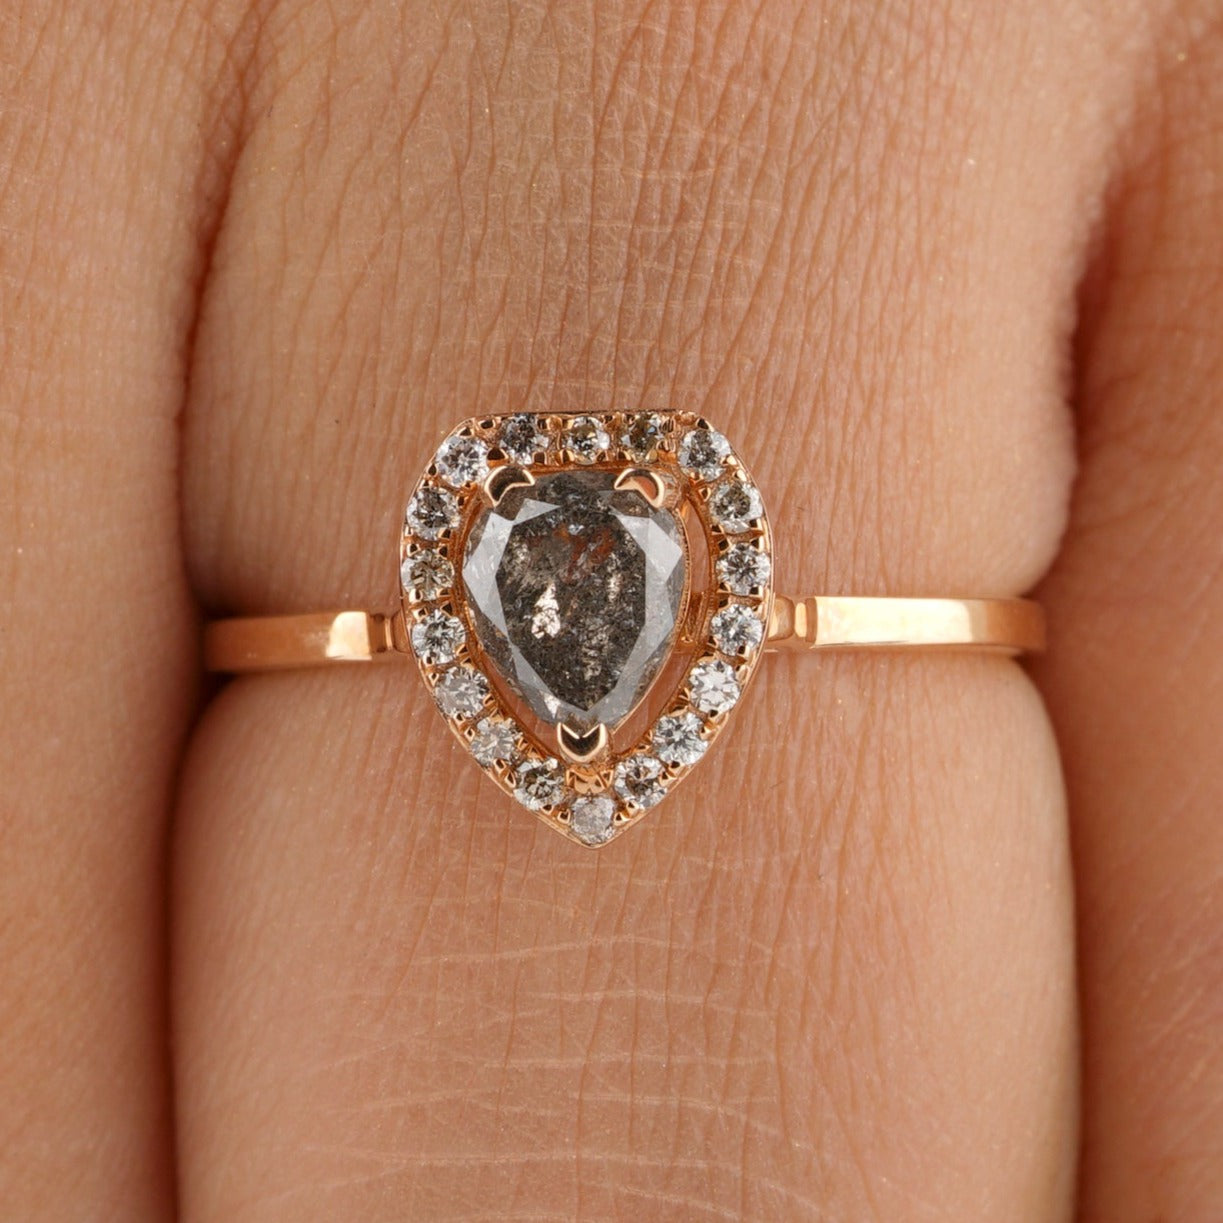 Art Deco Pear Shaped Diamond Engagement Ring - Eurekalook